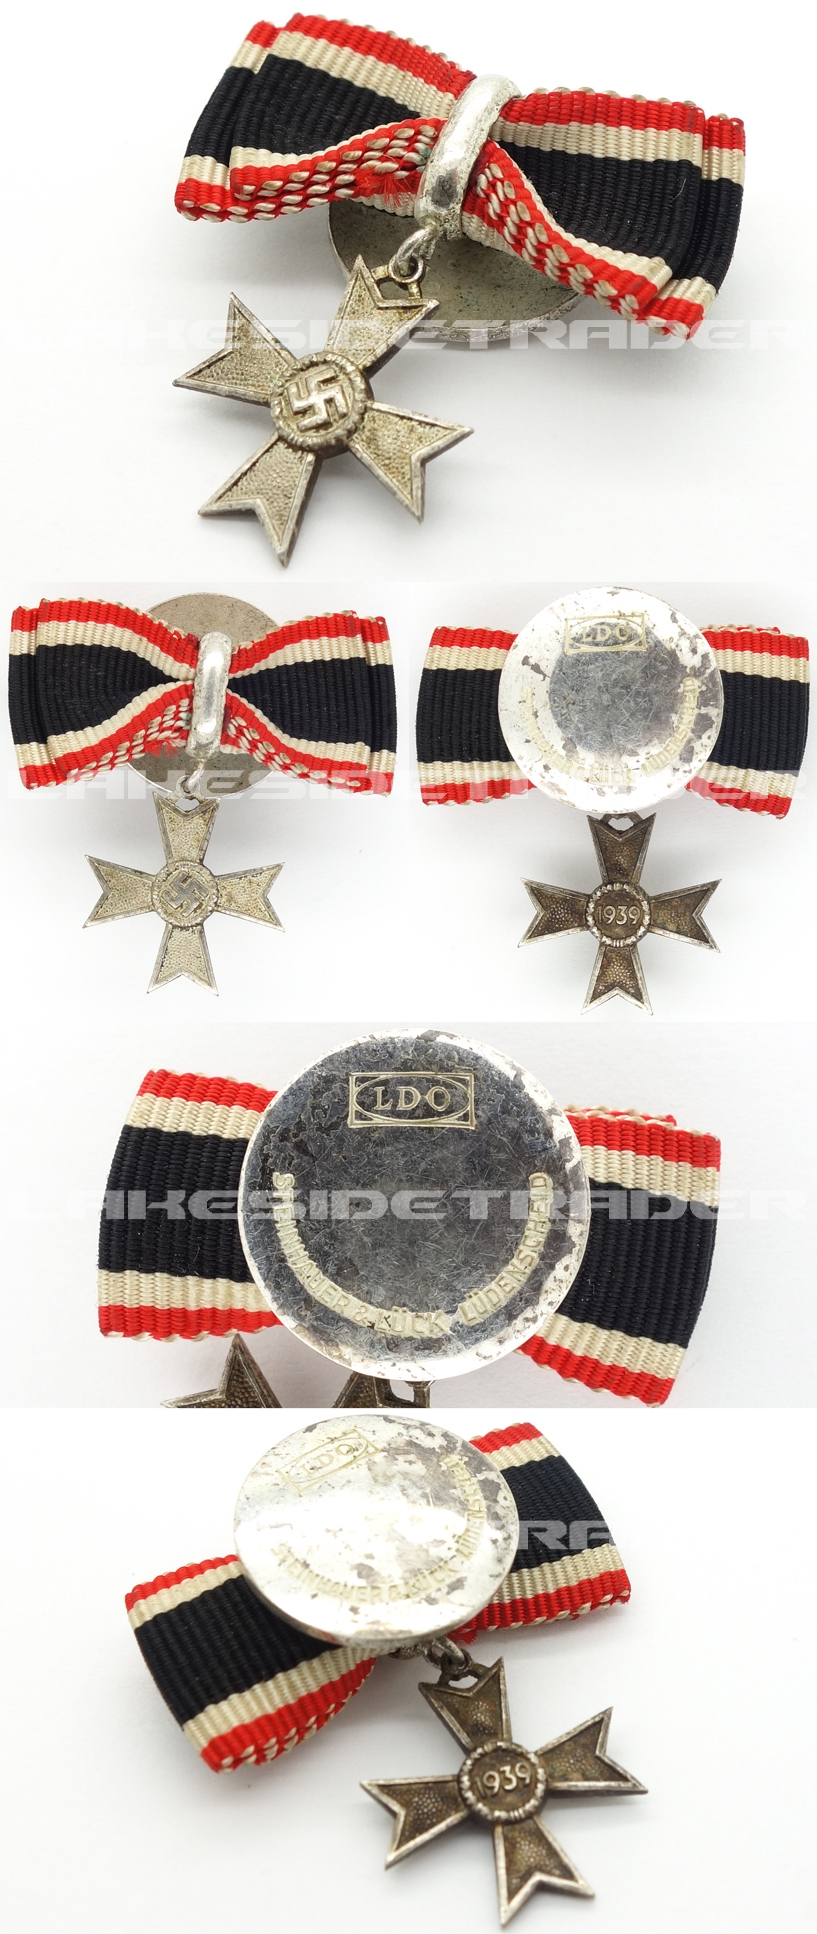 Miniature Buttonhole War Merit Knights Cross by S&L